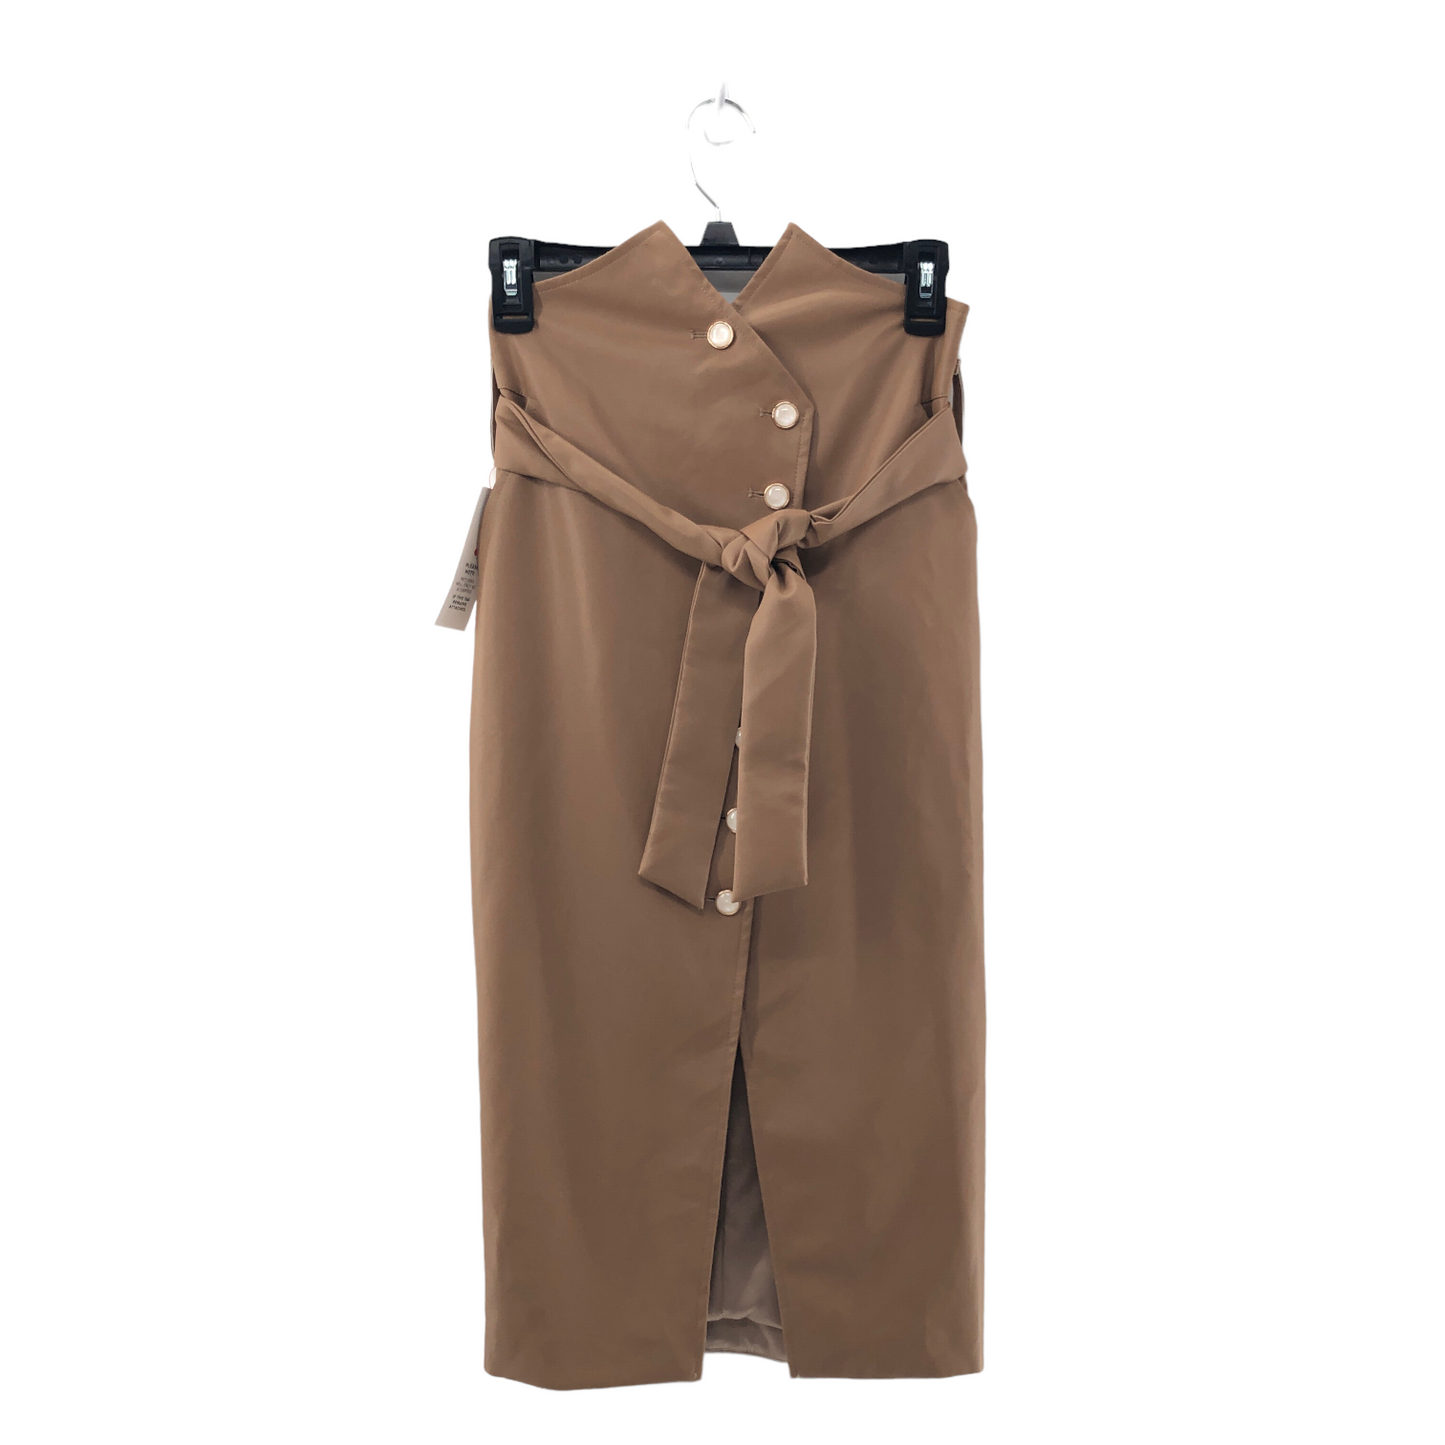 Bardot Tie Waist Skirt in Tan / replaced buttons